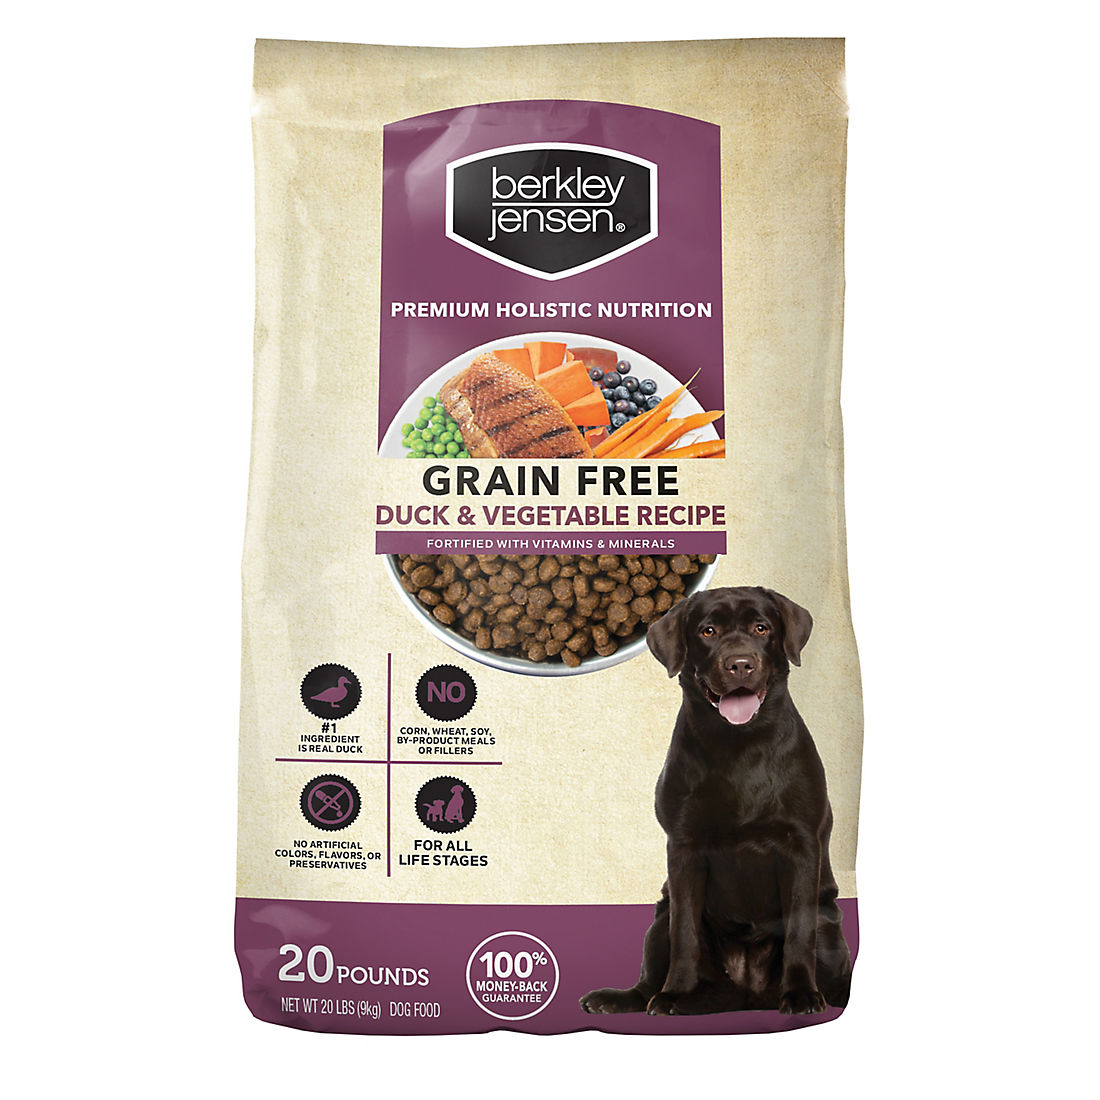 berkley jensen grain free dog food